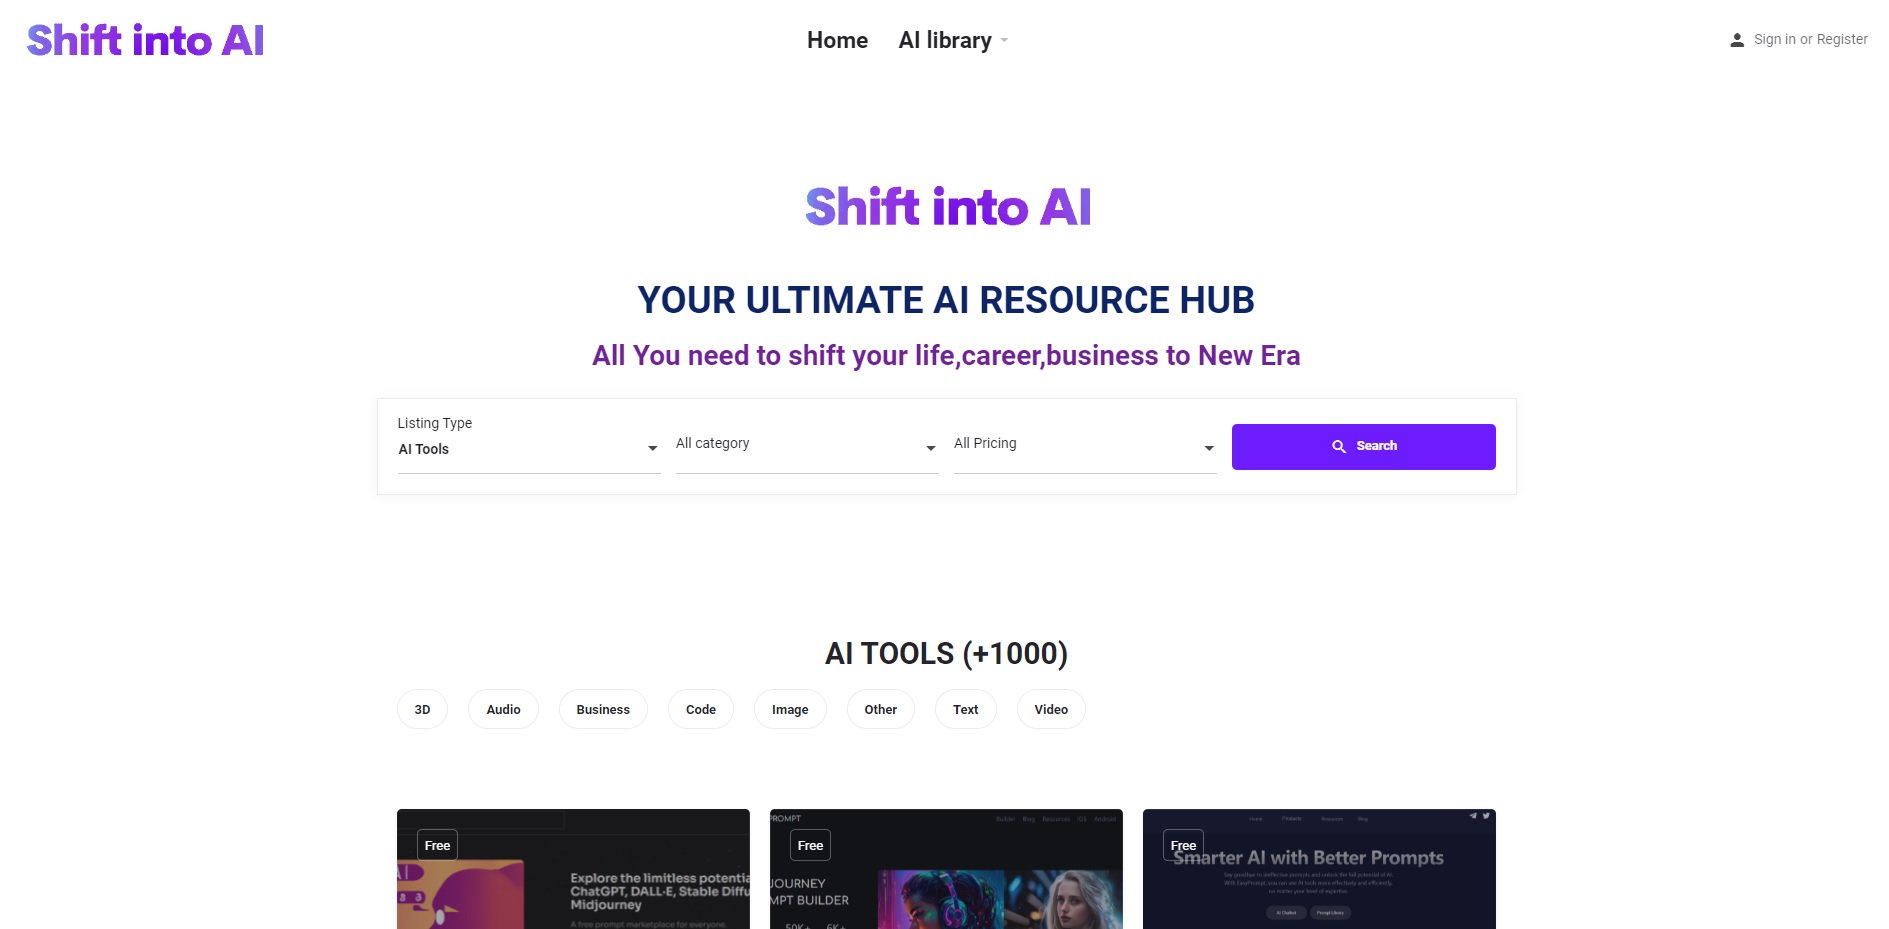 Don't Lose Job in the AI Era: Make the Shift into AI and Secure Future